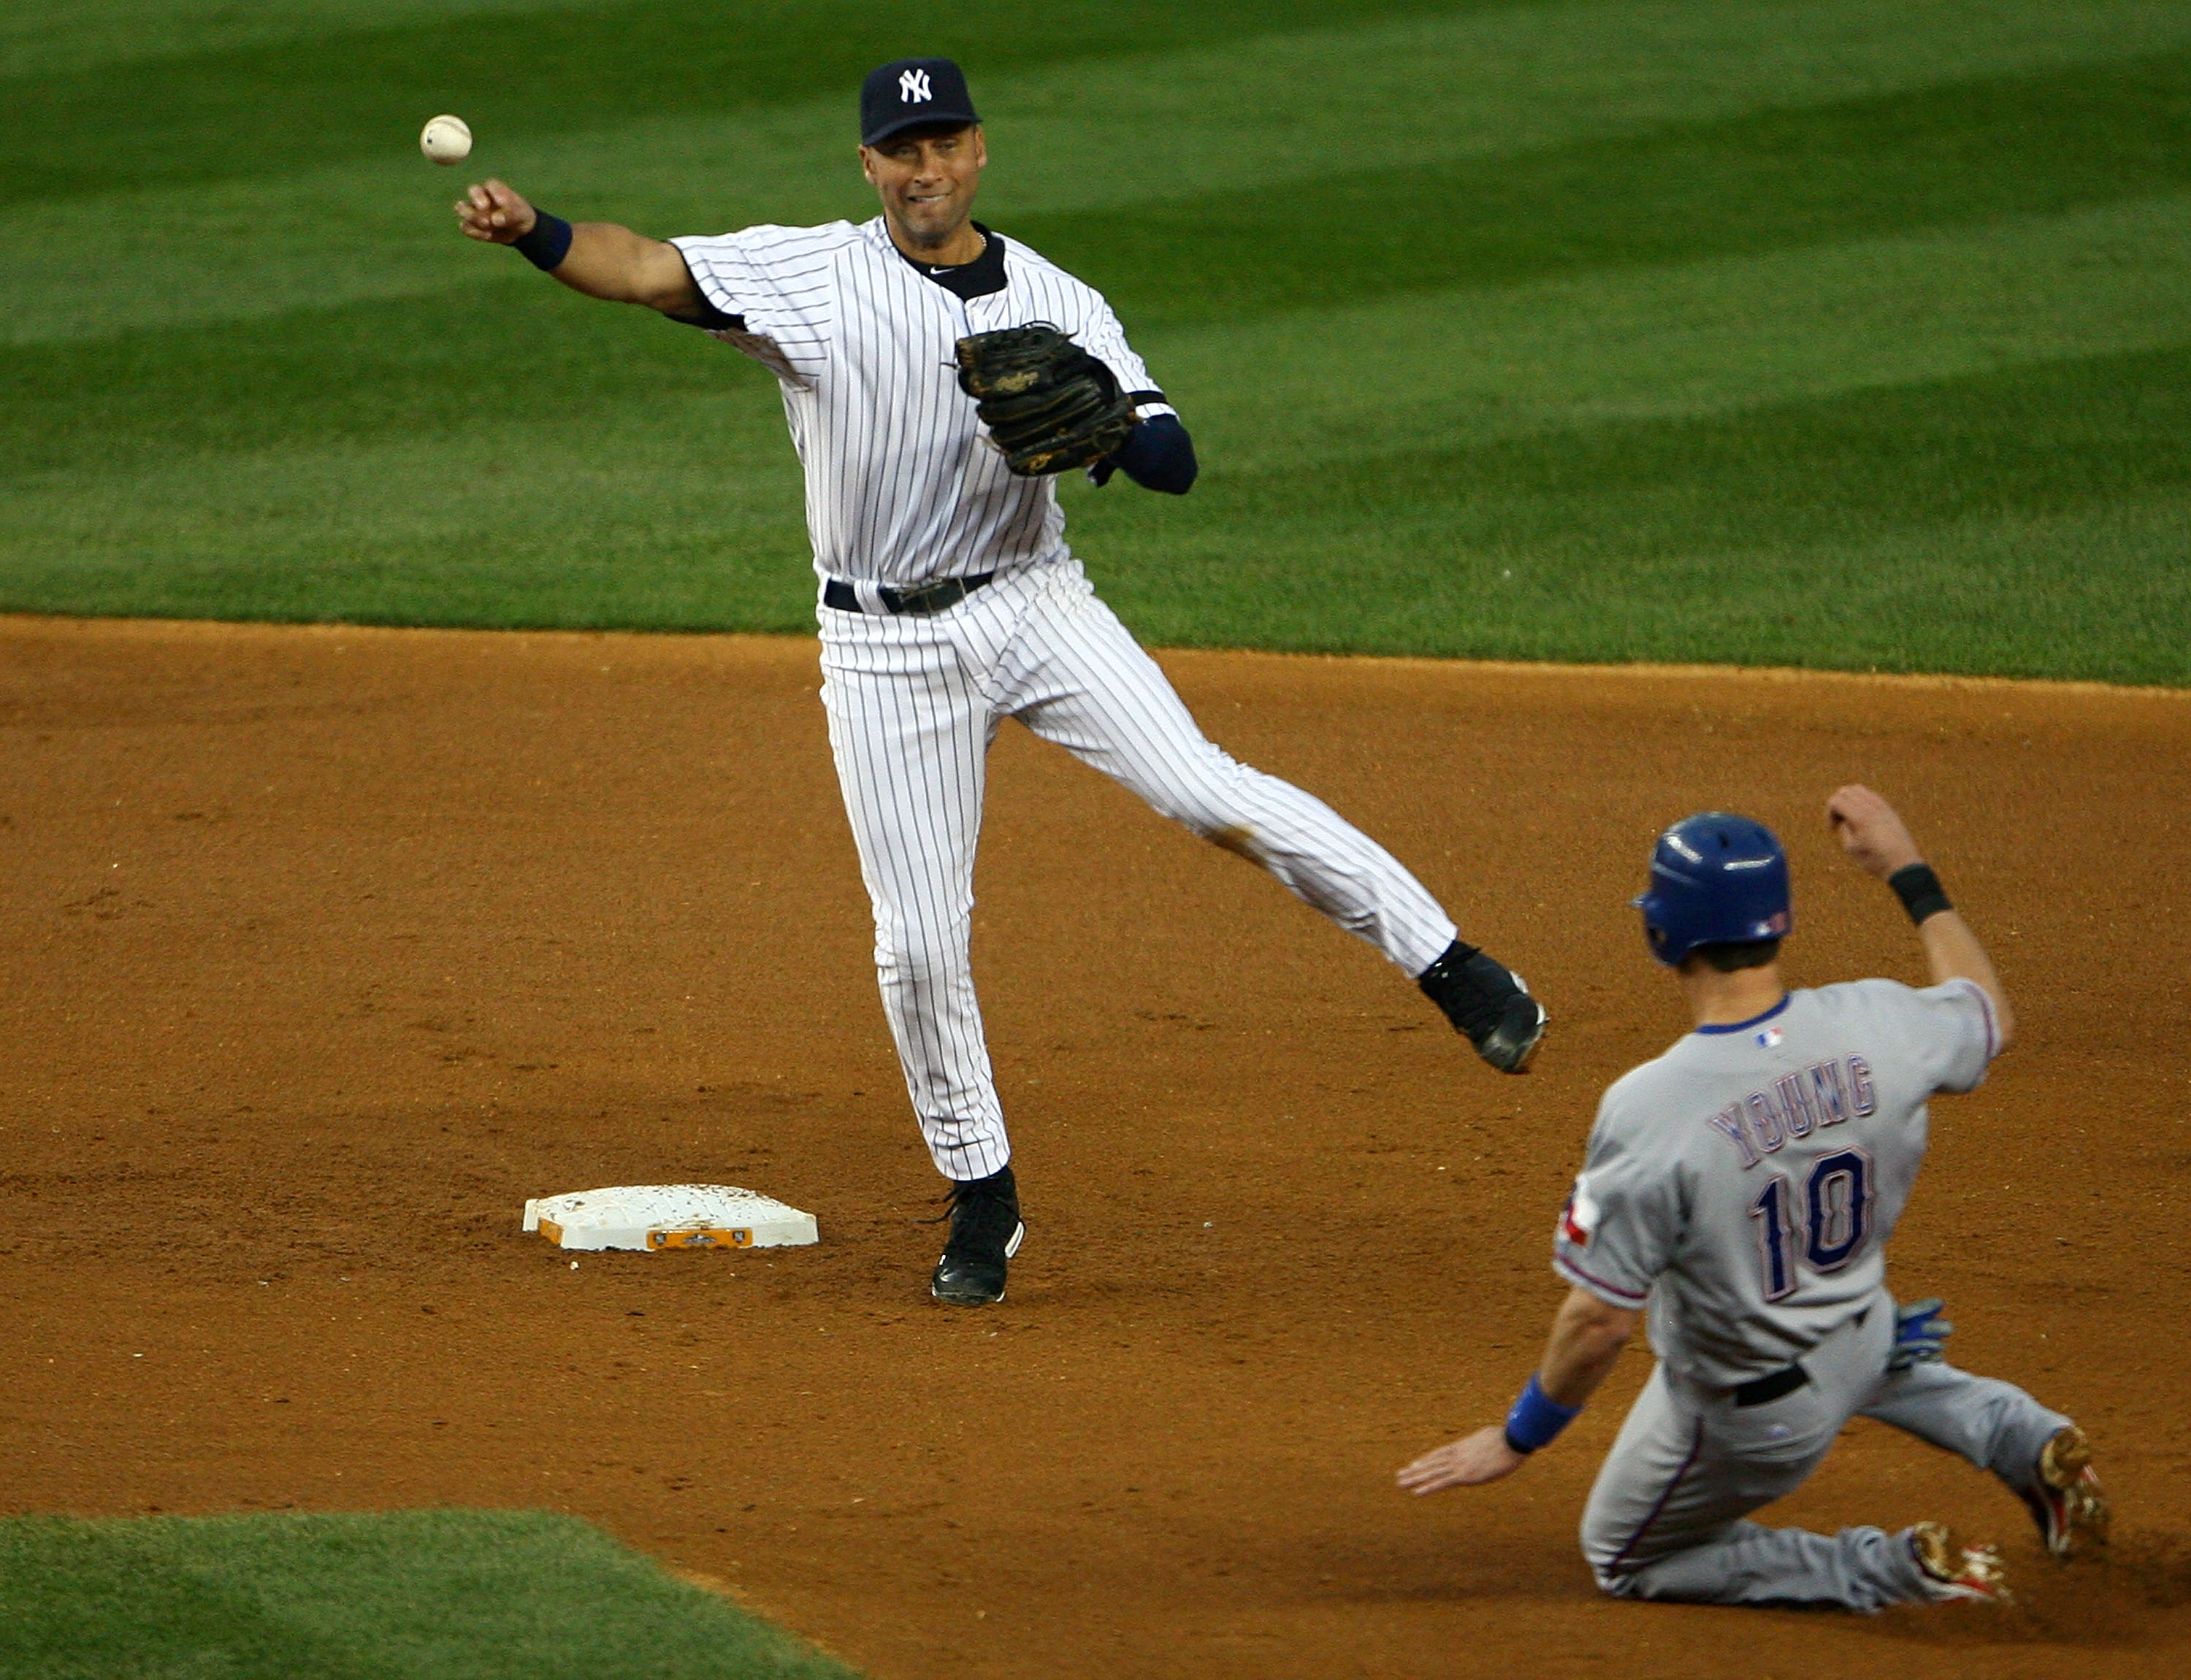 NY Yankees legend Derek Jeter ends stellar career on high note